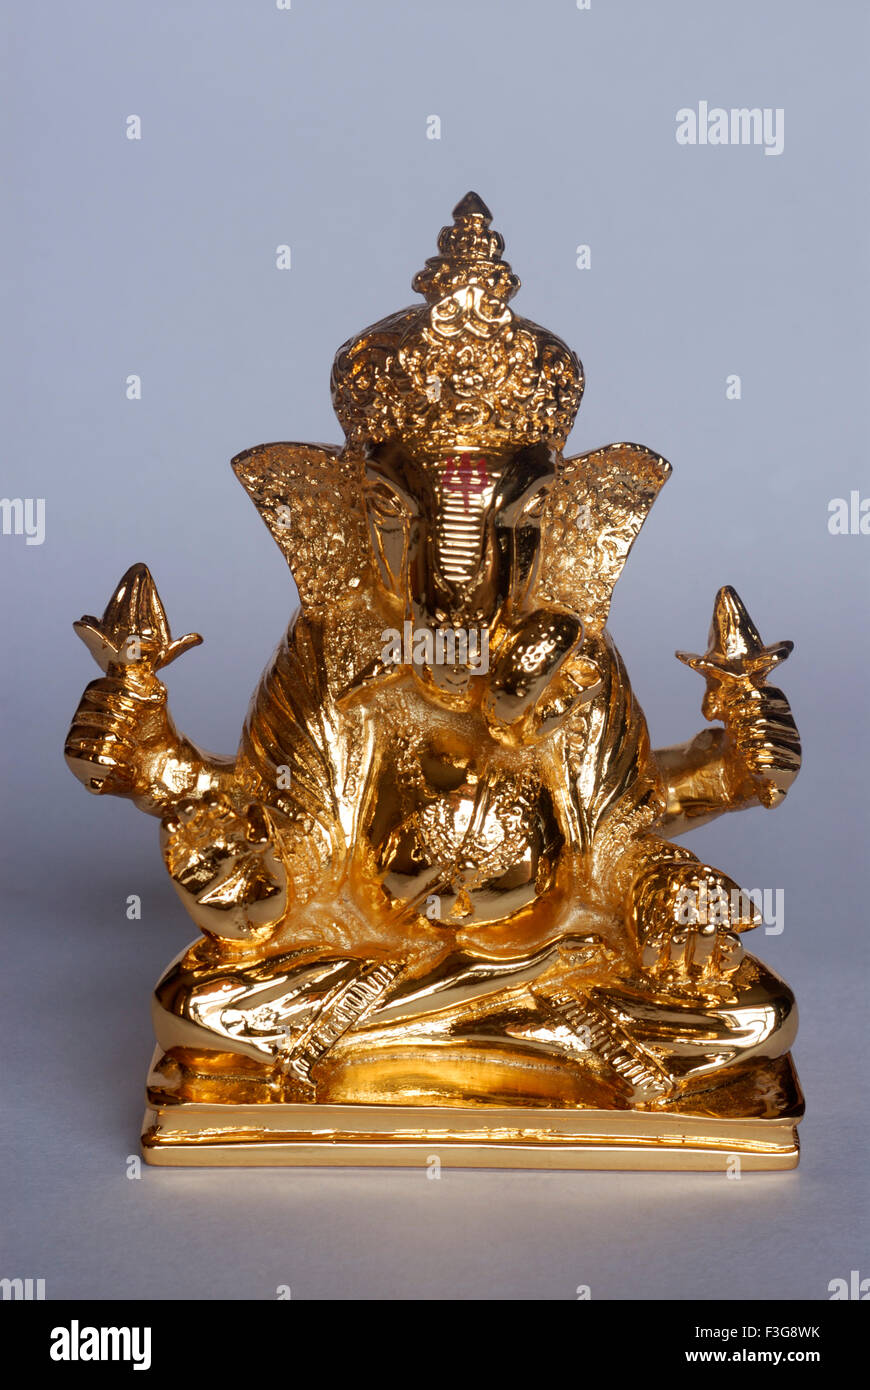 Pure gold plated idol of lord ganesha (elephant headed god) ; Bombay now Mumbai ; Maharashtra ; India Stock Photo